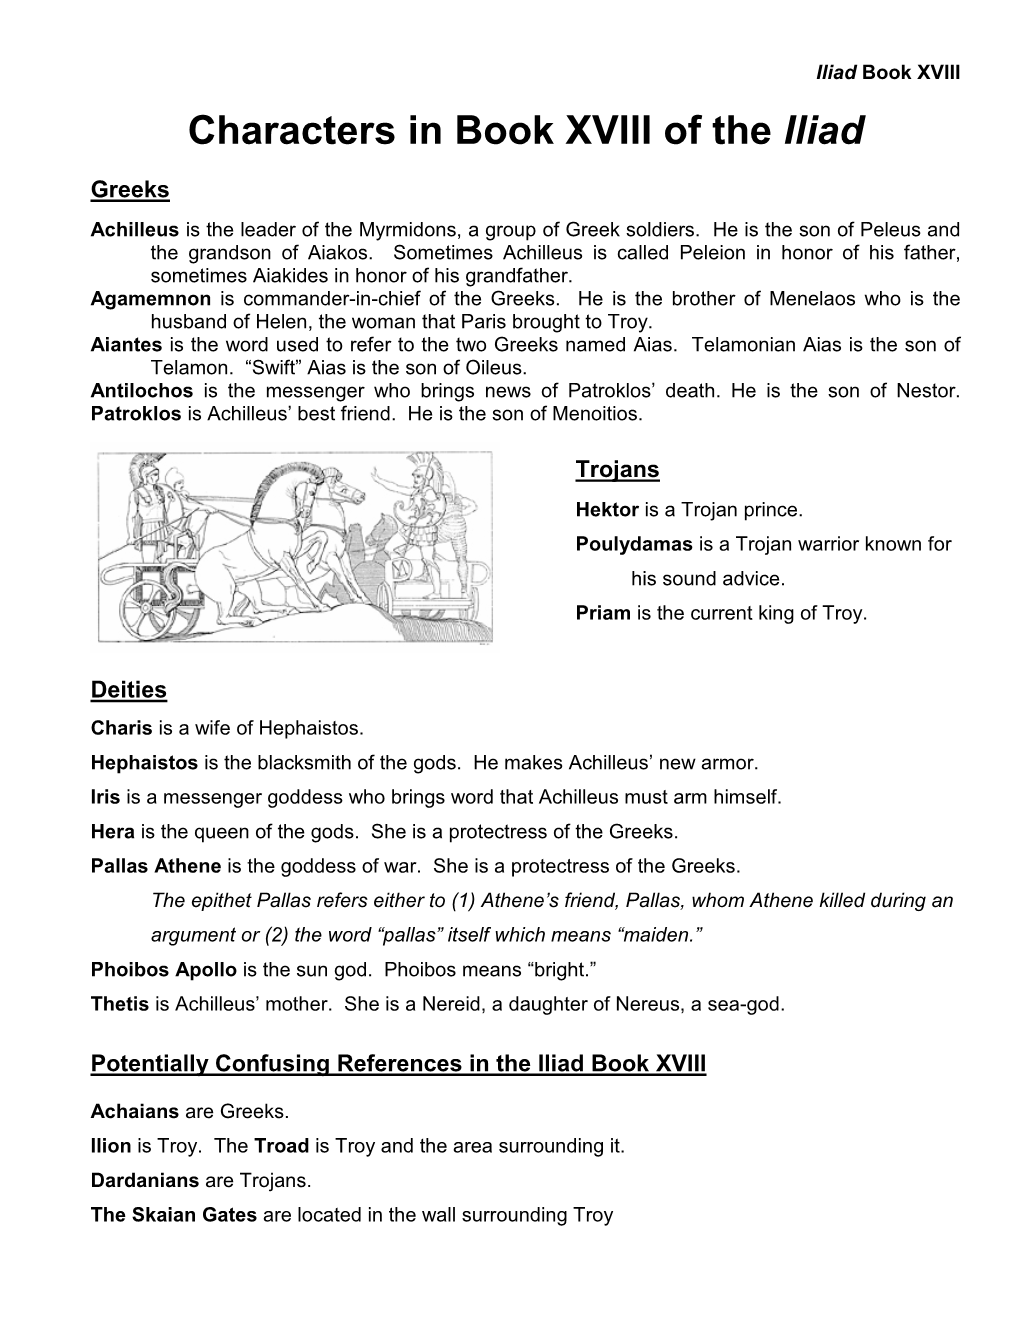 Characters in Book XVIII of the Iliad